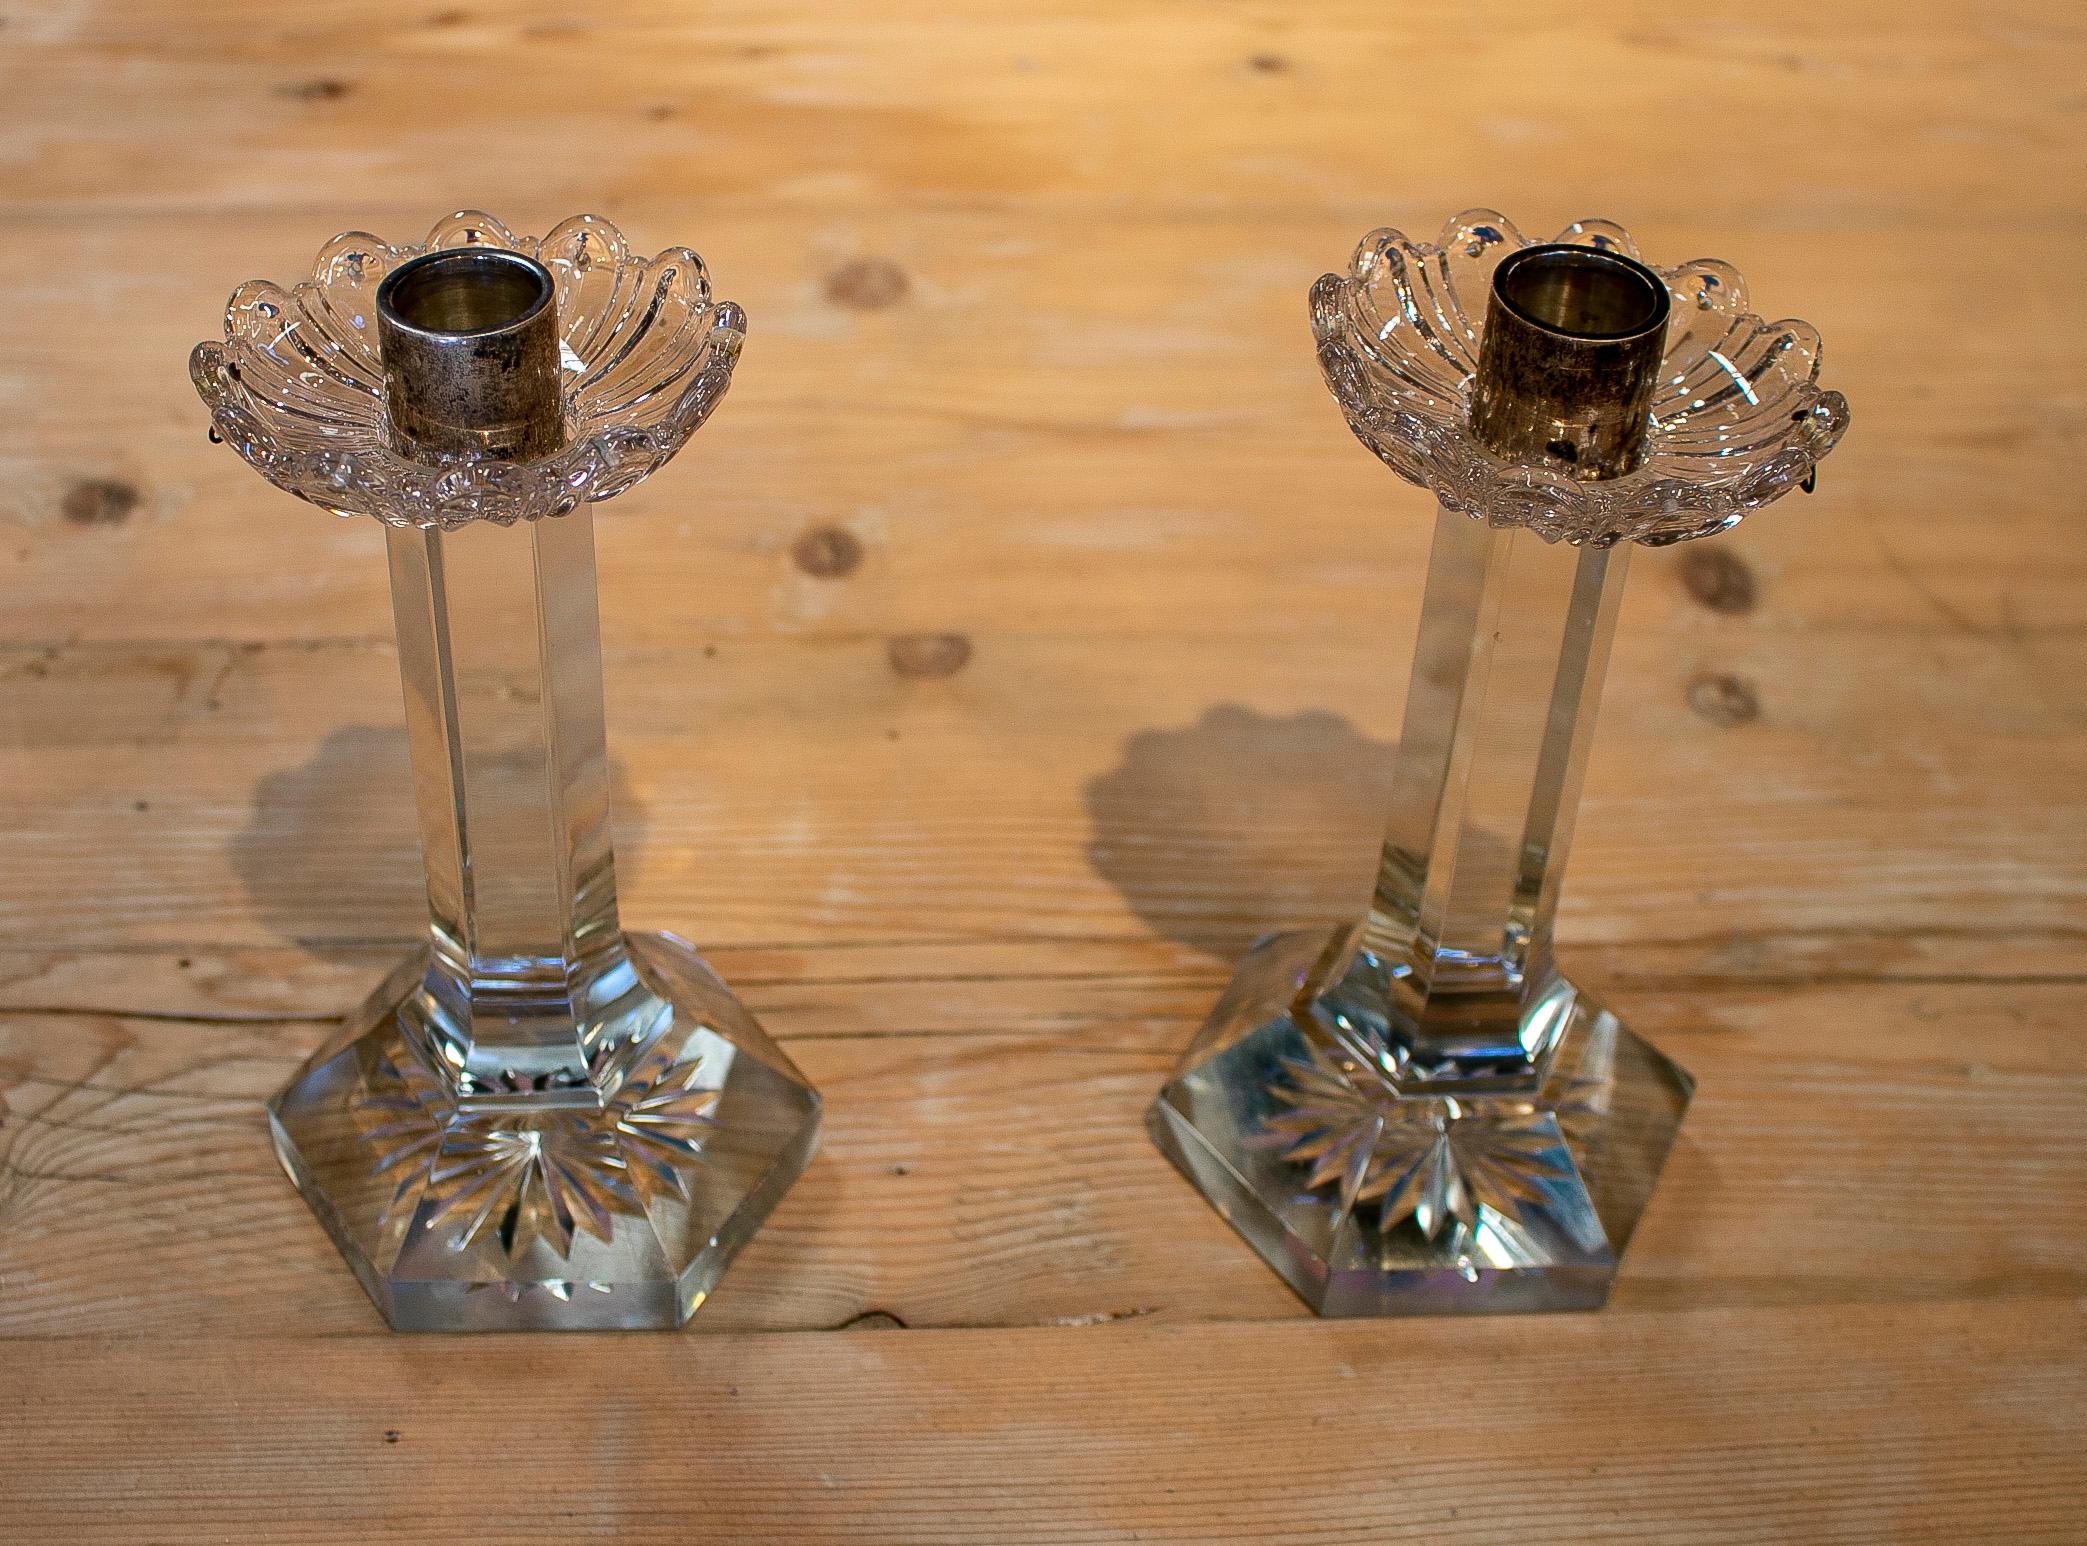 Vintage 1950s Spanish hand caved crystal candlesticks.
  